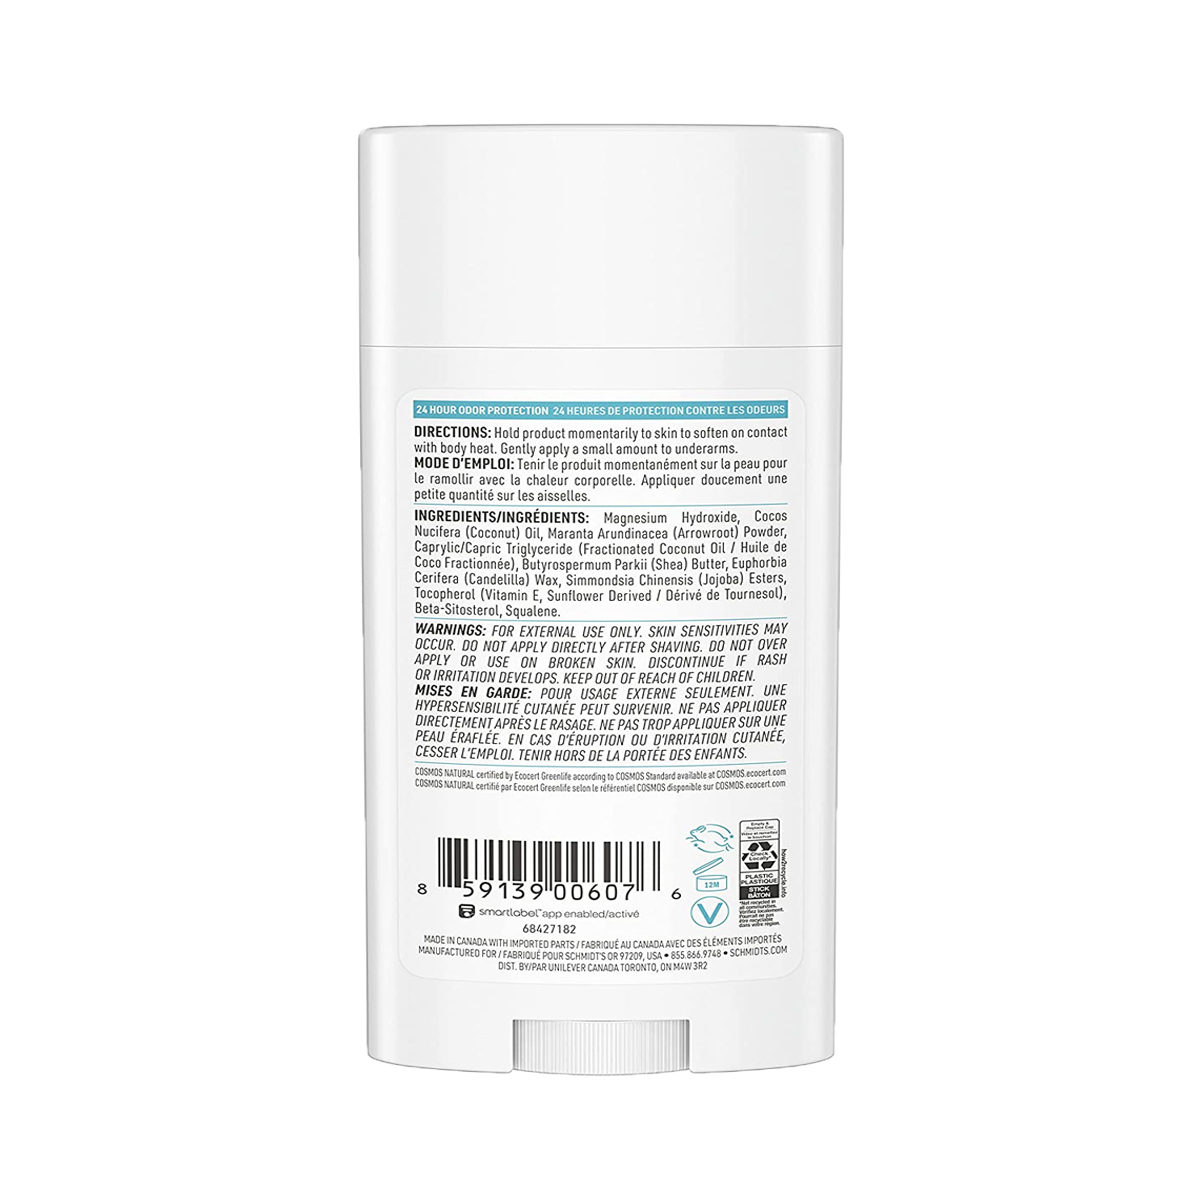 Schmidt's Aluminum Free Natural Deodorant for Sensitive Skin, 2.65 oz - image 3 of 7